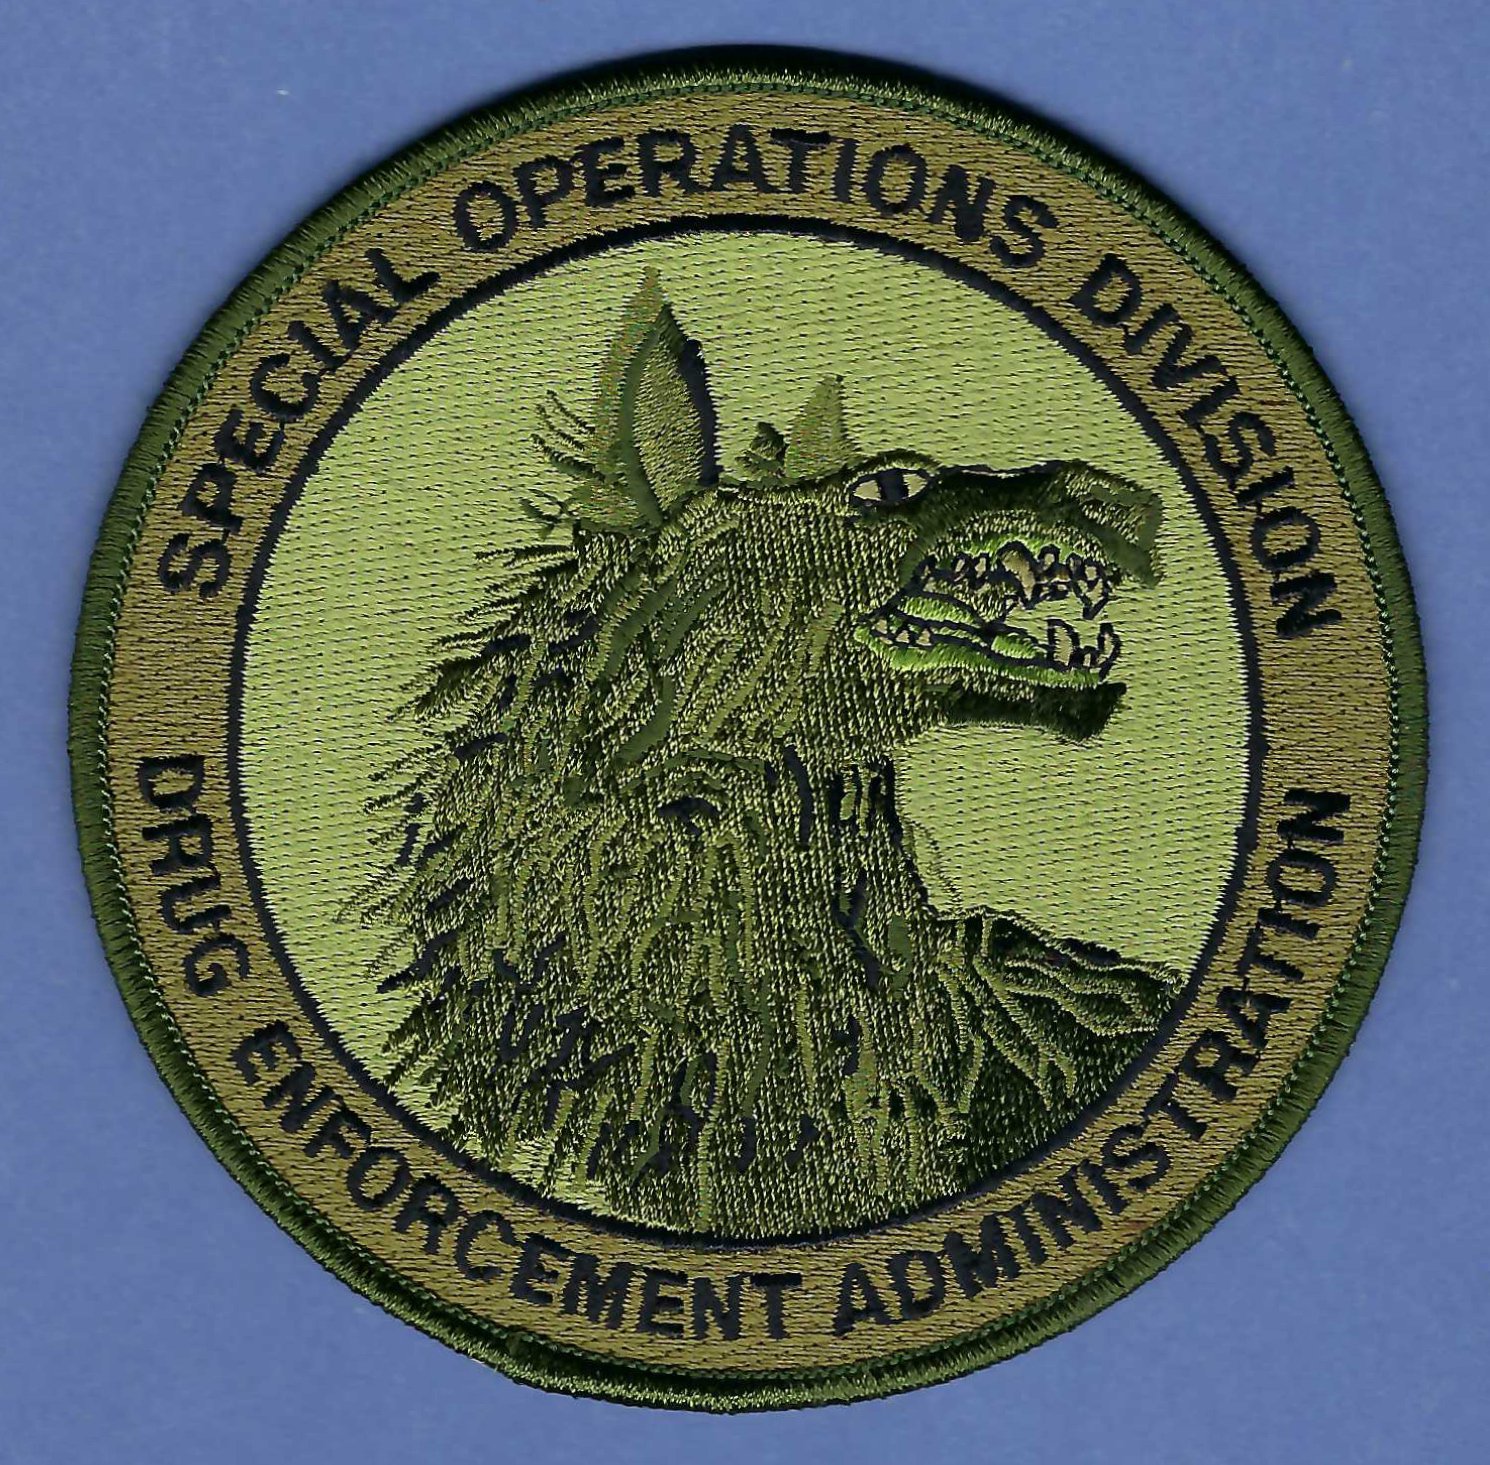 DEA Drug Enforcement Administration Special Operations Division Patch